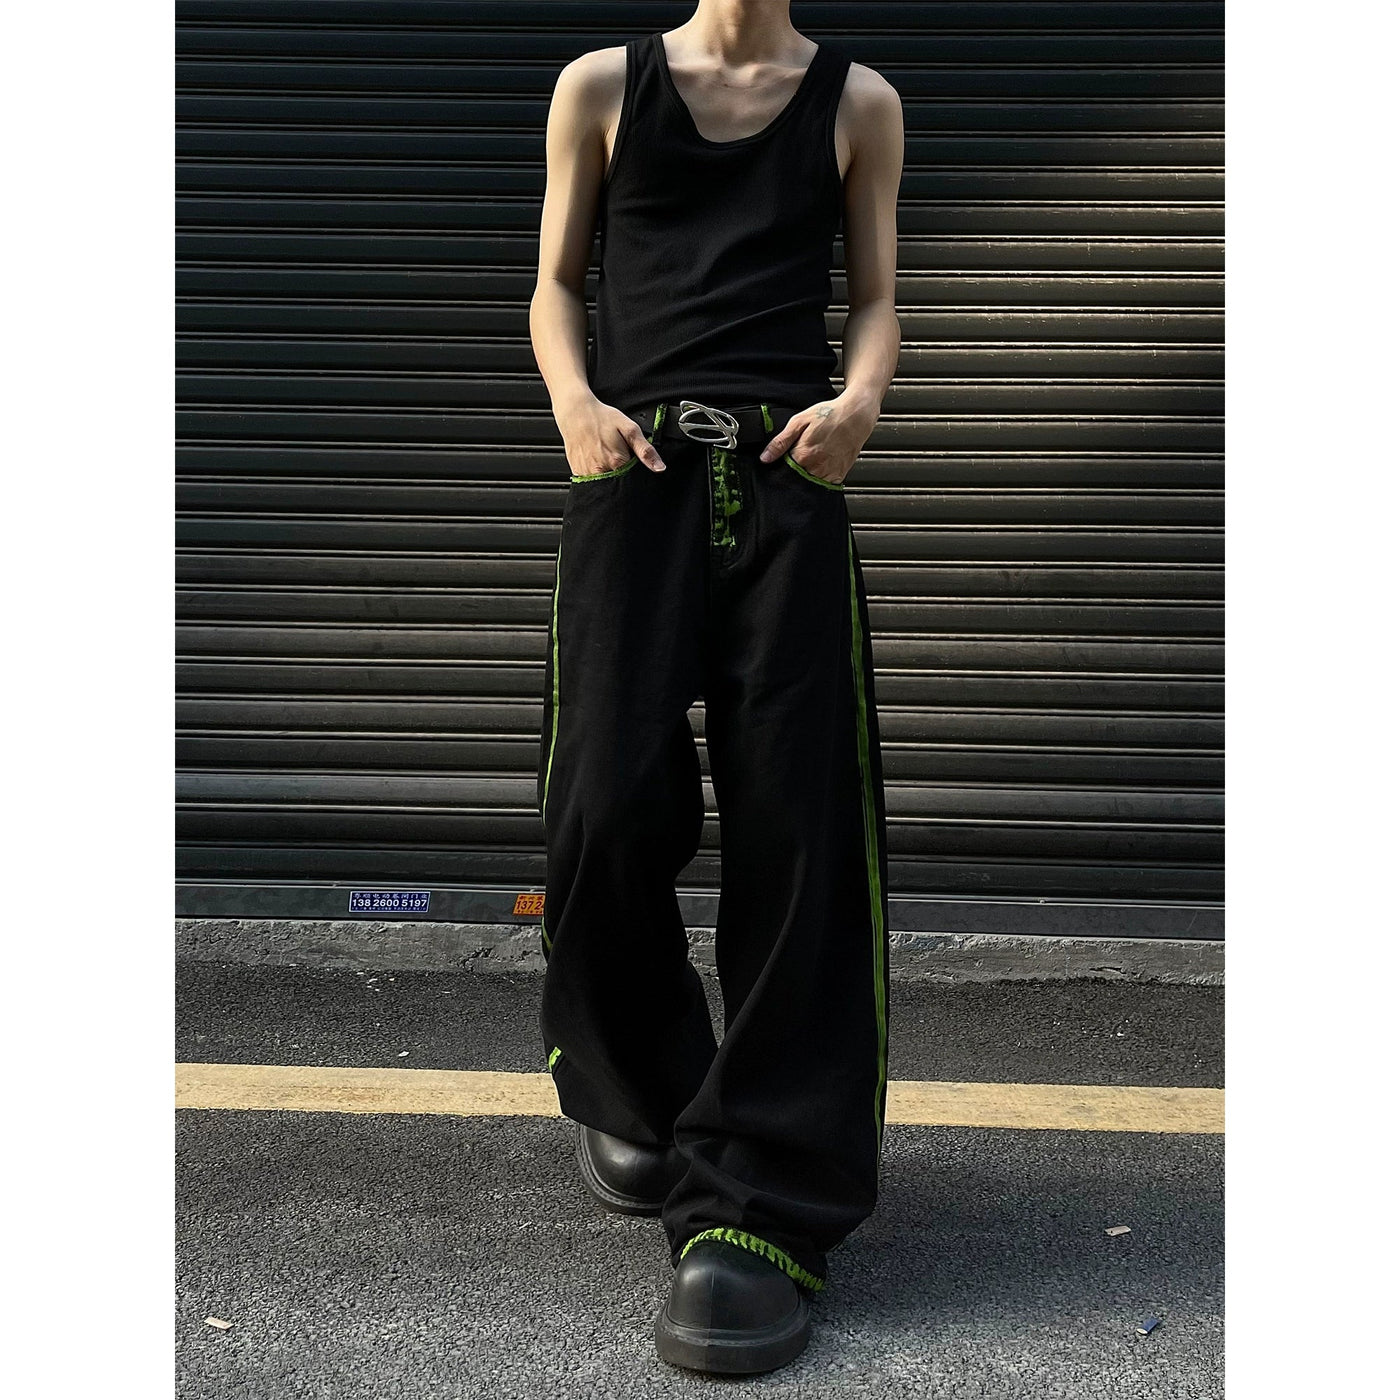 Graffiti Line Wide Pants Korean Street Fashion Pants By MaxDstr Shop Online at OH Vault